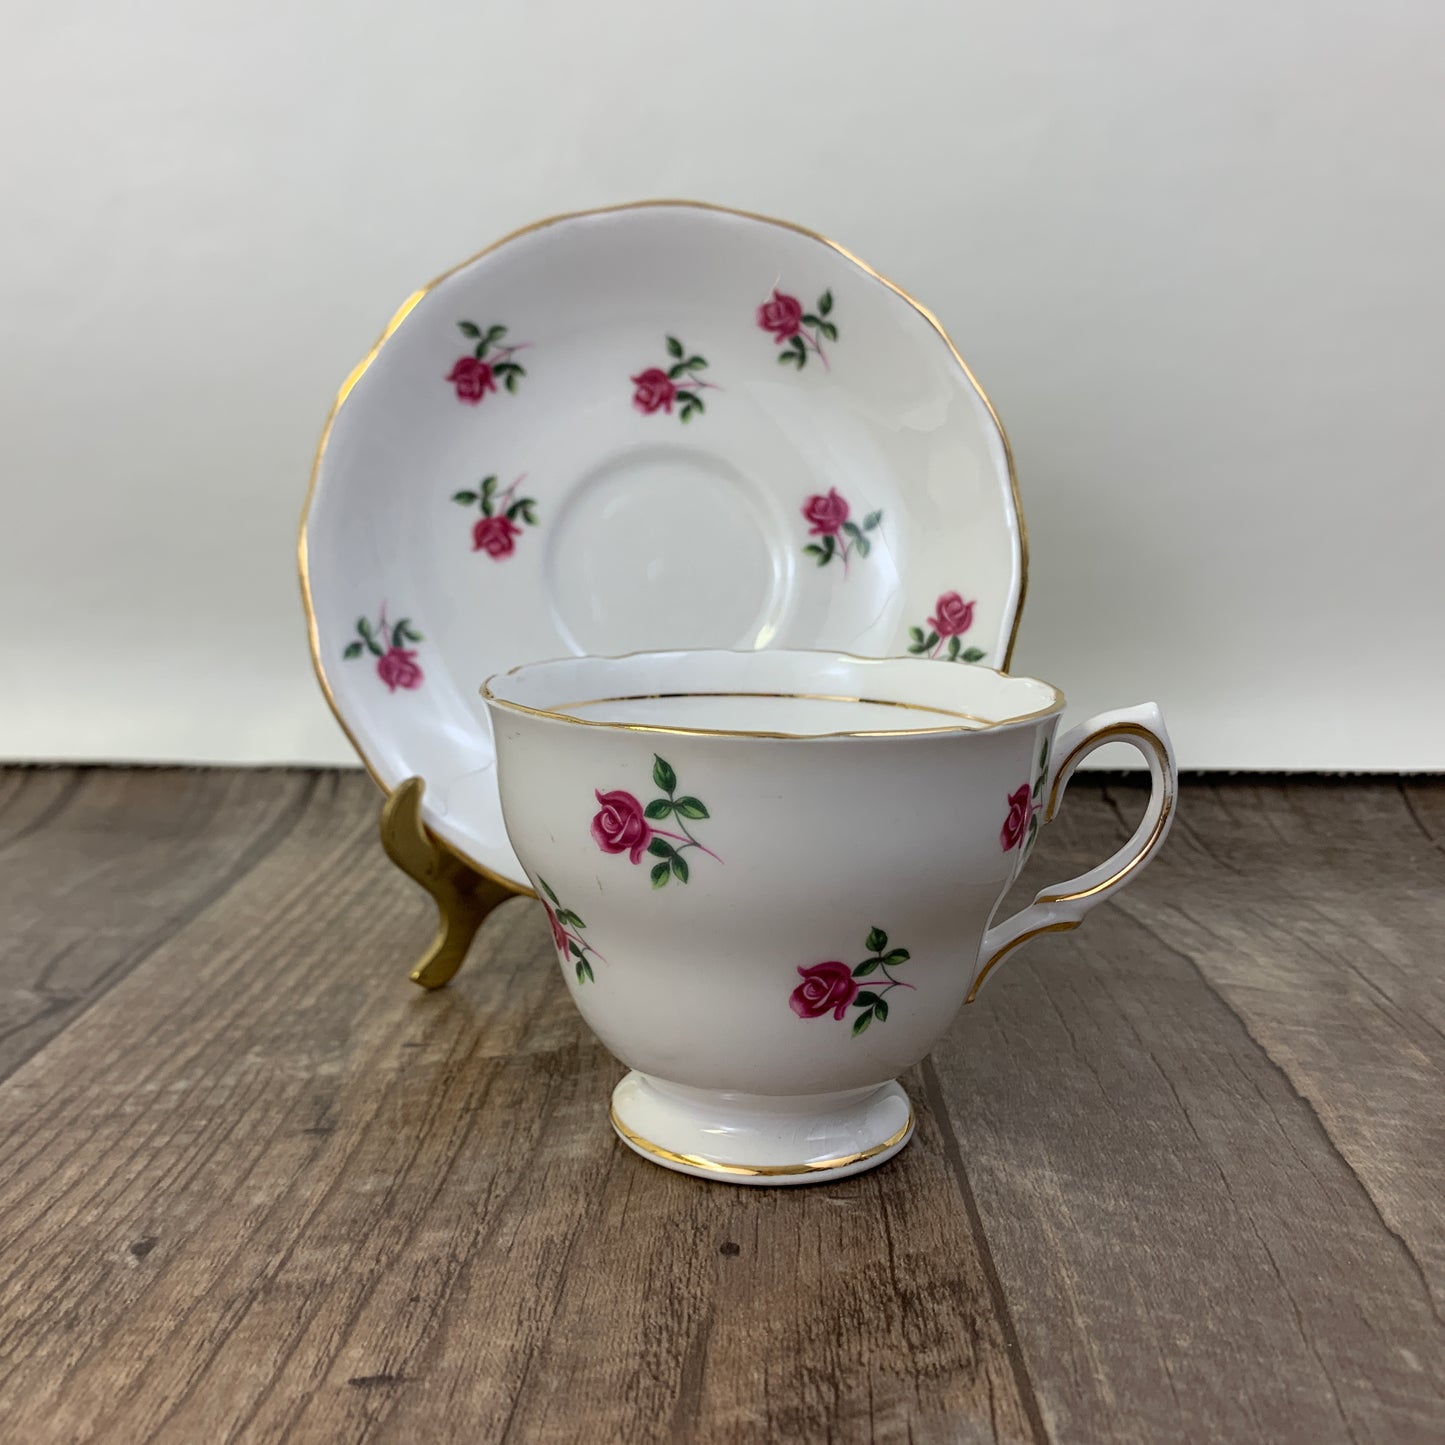 Vintage Teacup with Pink  Rosebuds Colclough Bone China English Tea Cups